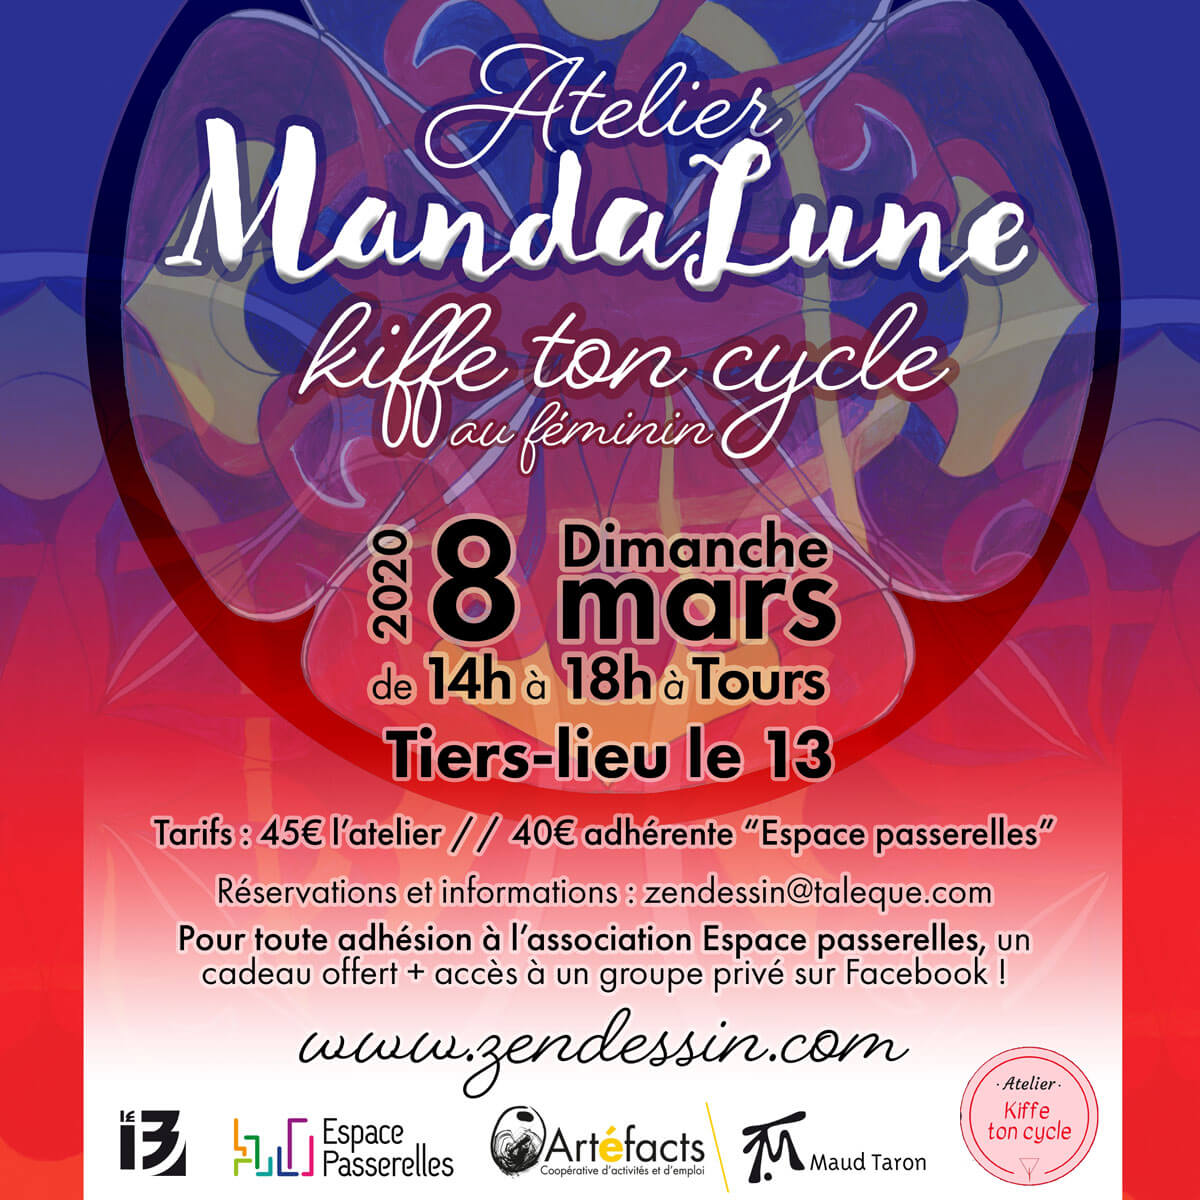 Atelier MandaLune au féminin” (kiffe ton cycle) avec Maud Taron